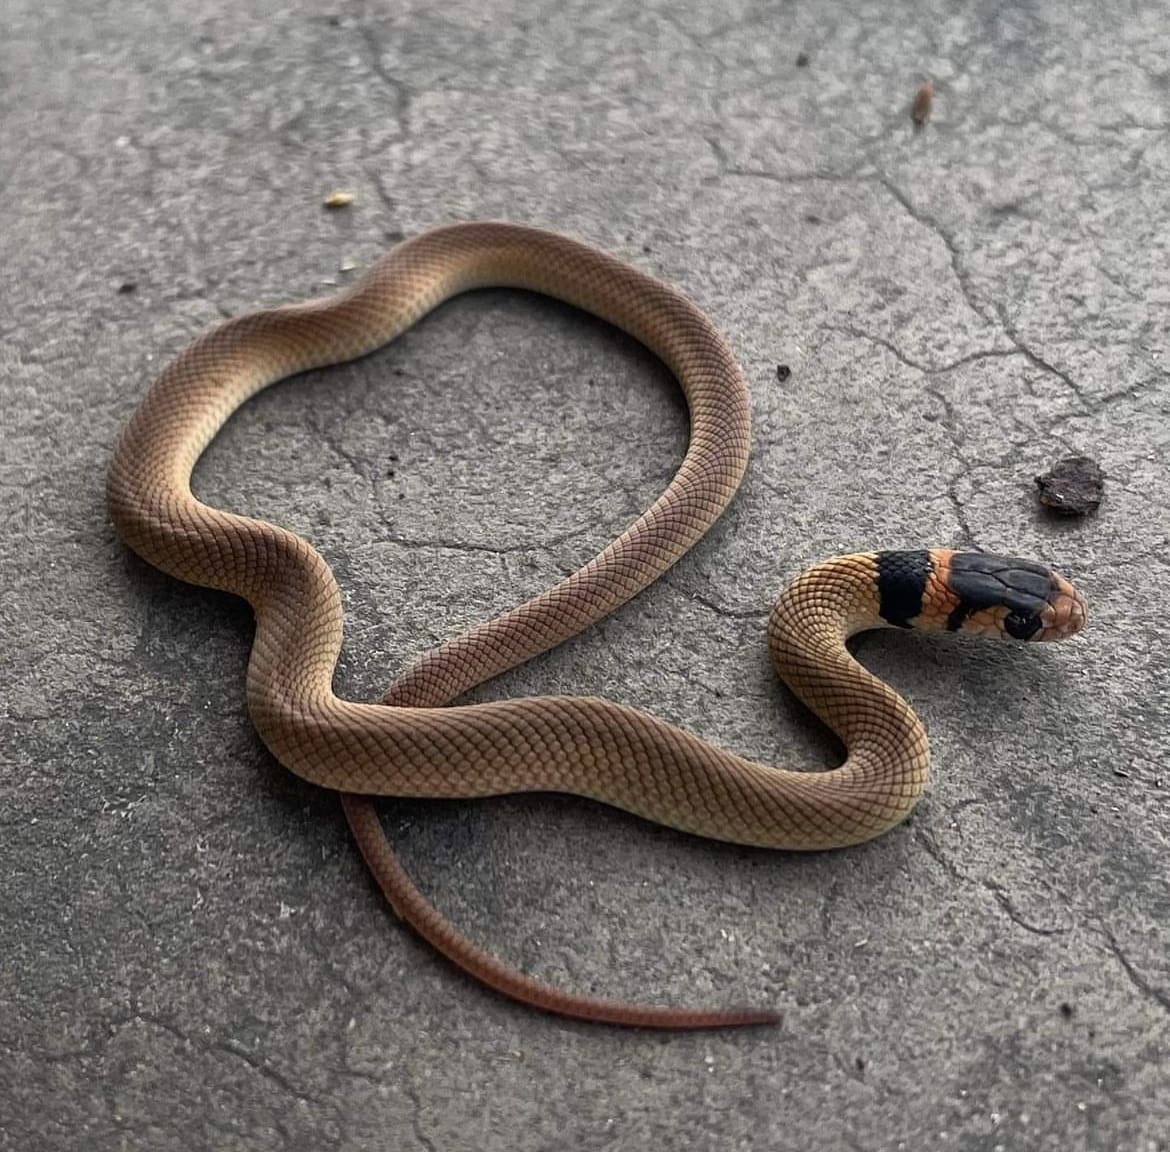 Snakes in Australia - Hatchling Eastern Brown